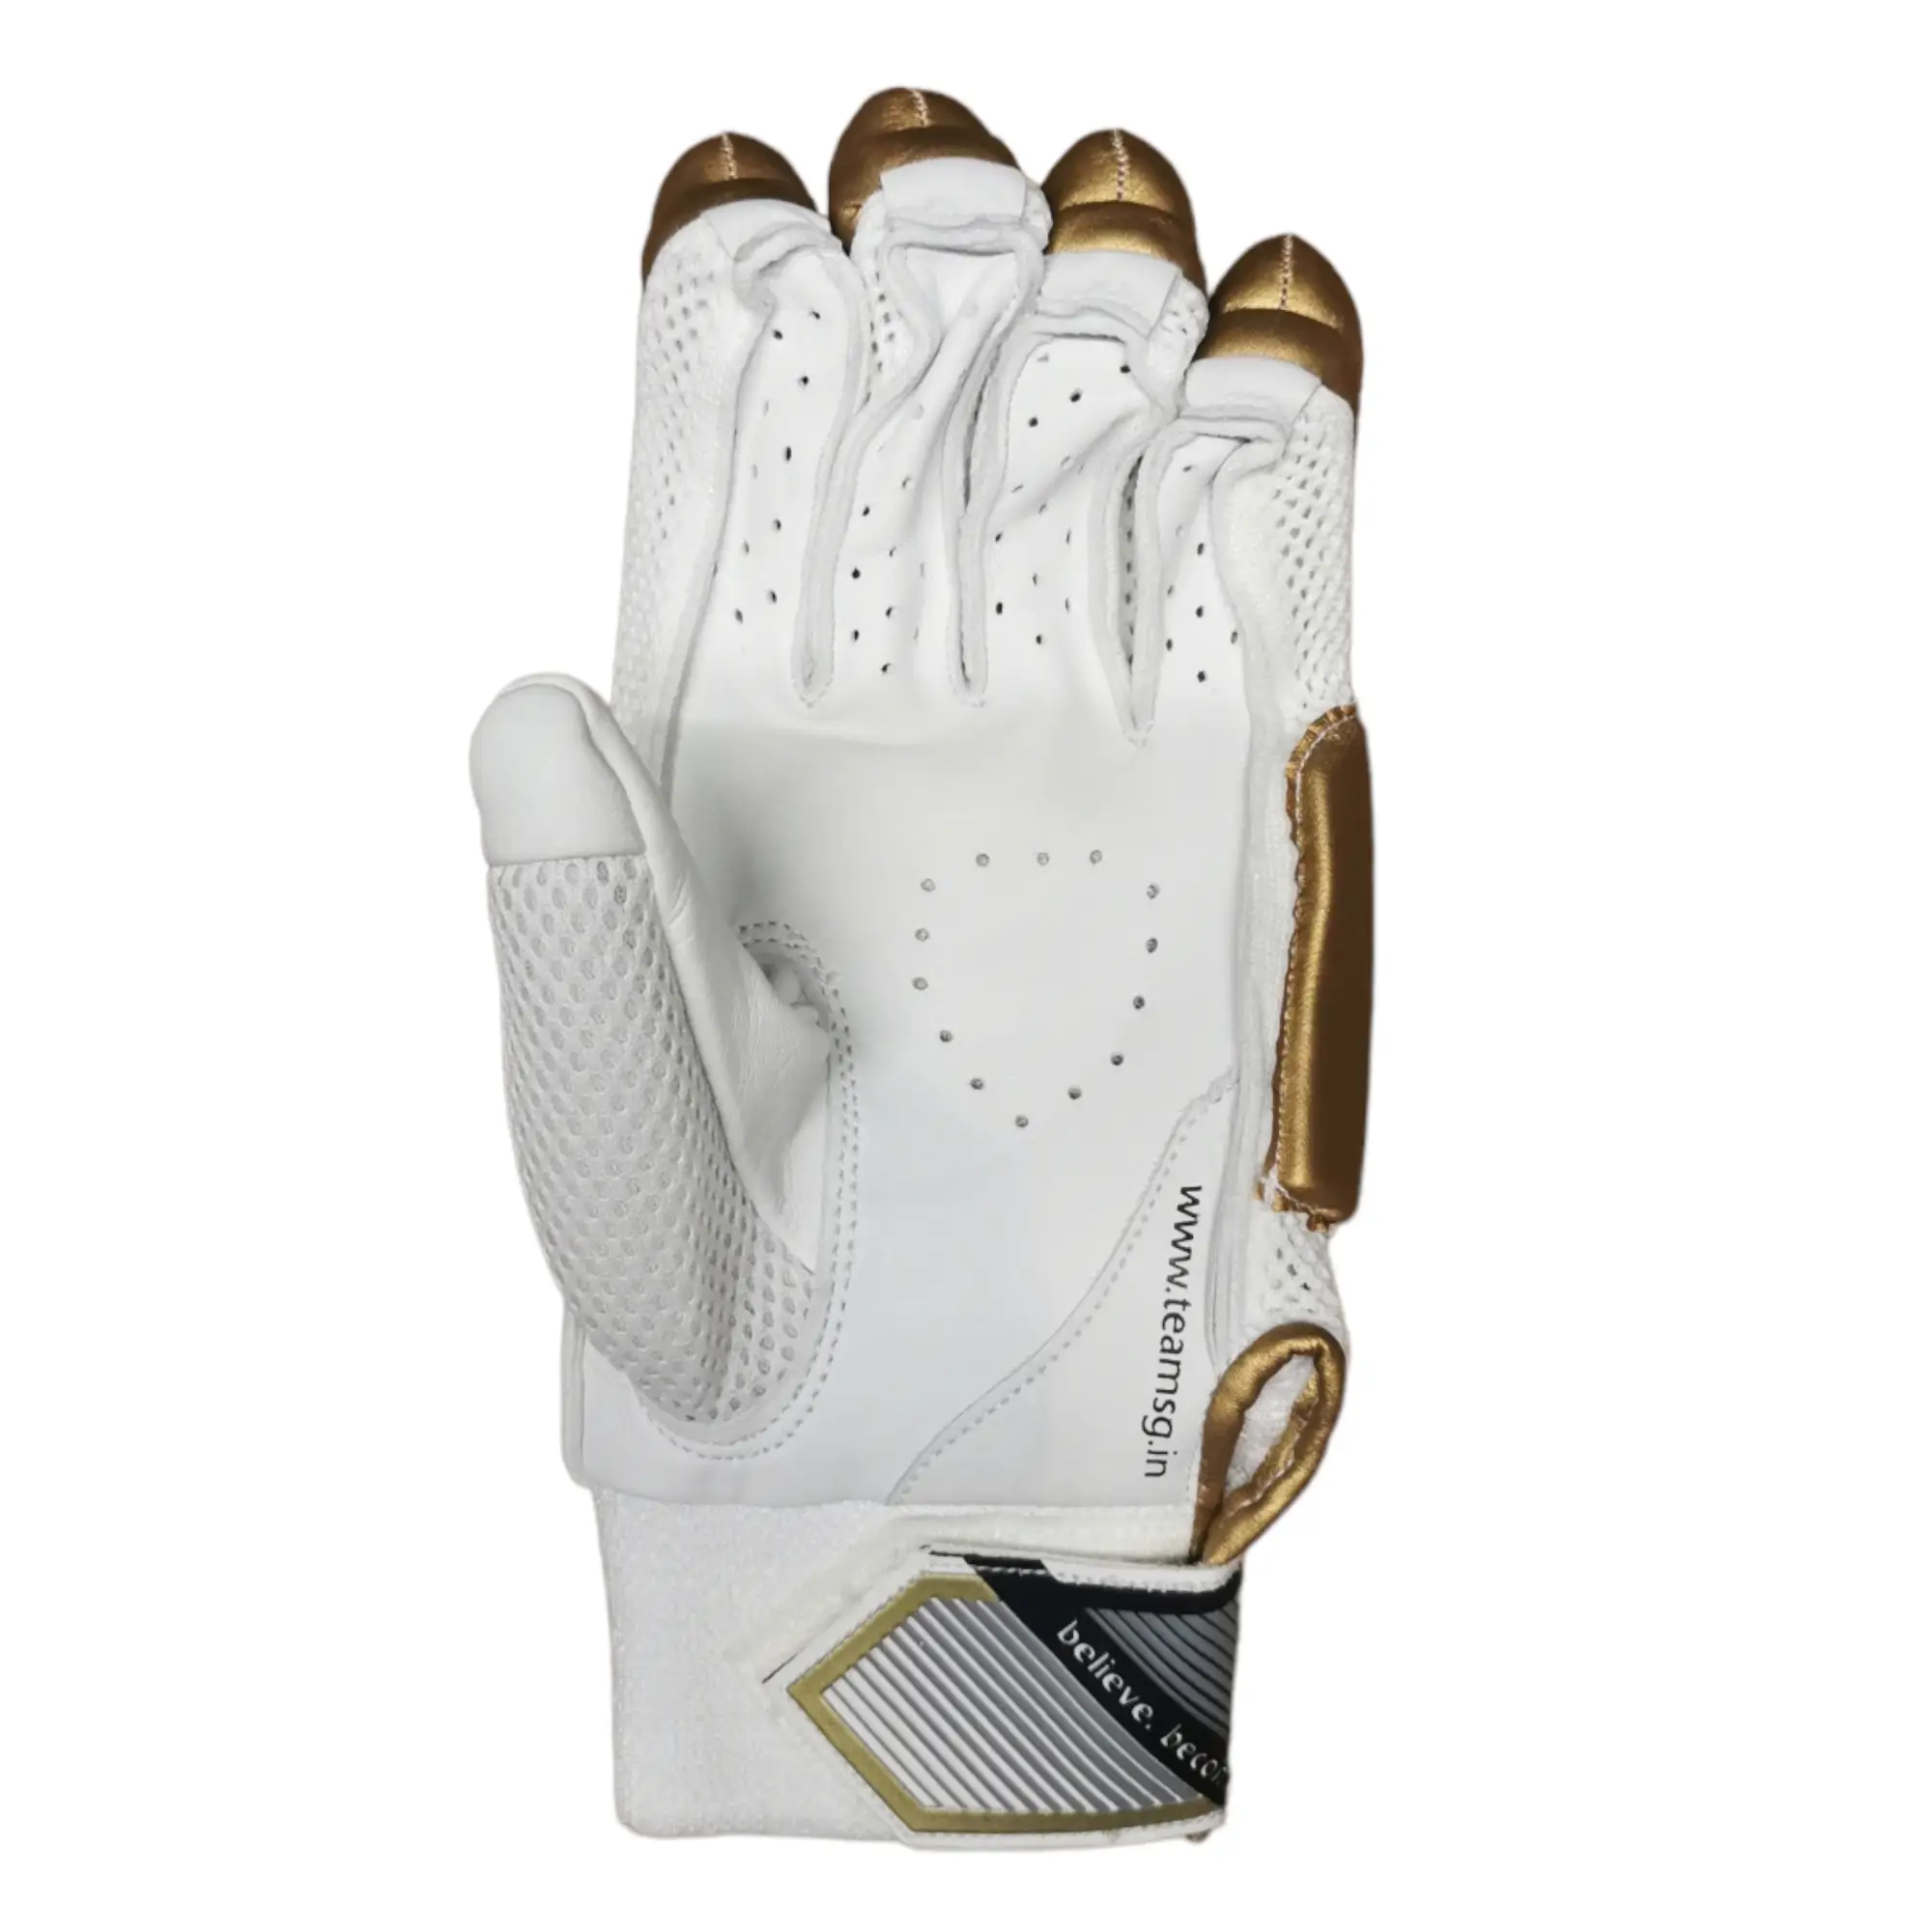 SG Test Gold Cricket Batting Gloves - GLOVE - BATTING